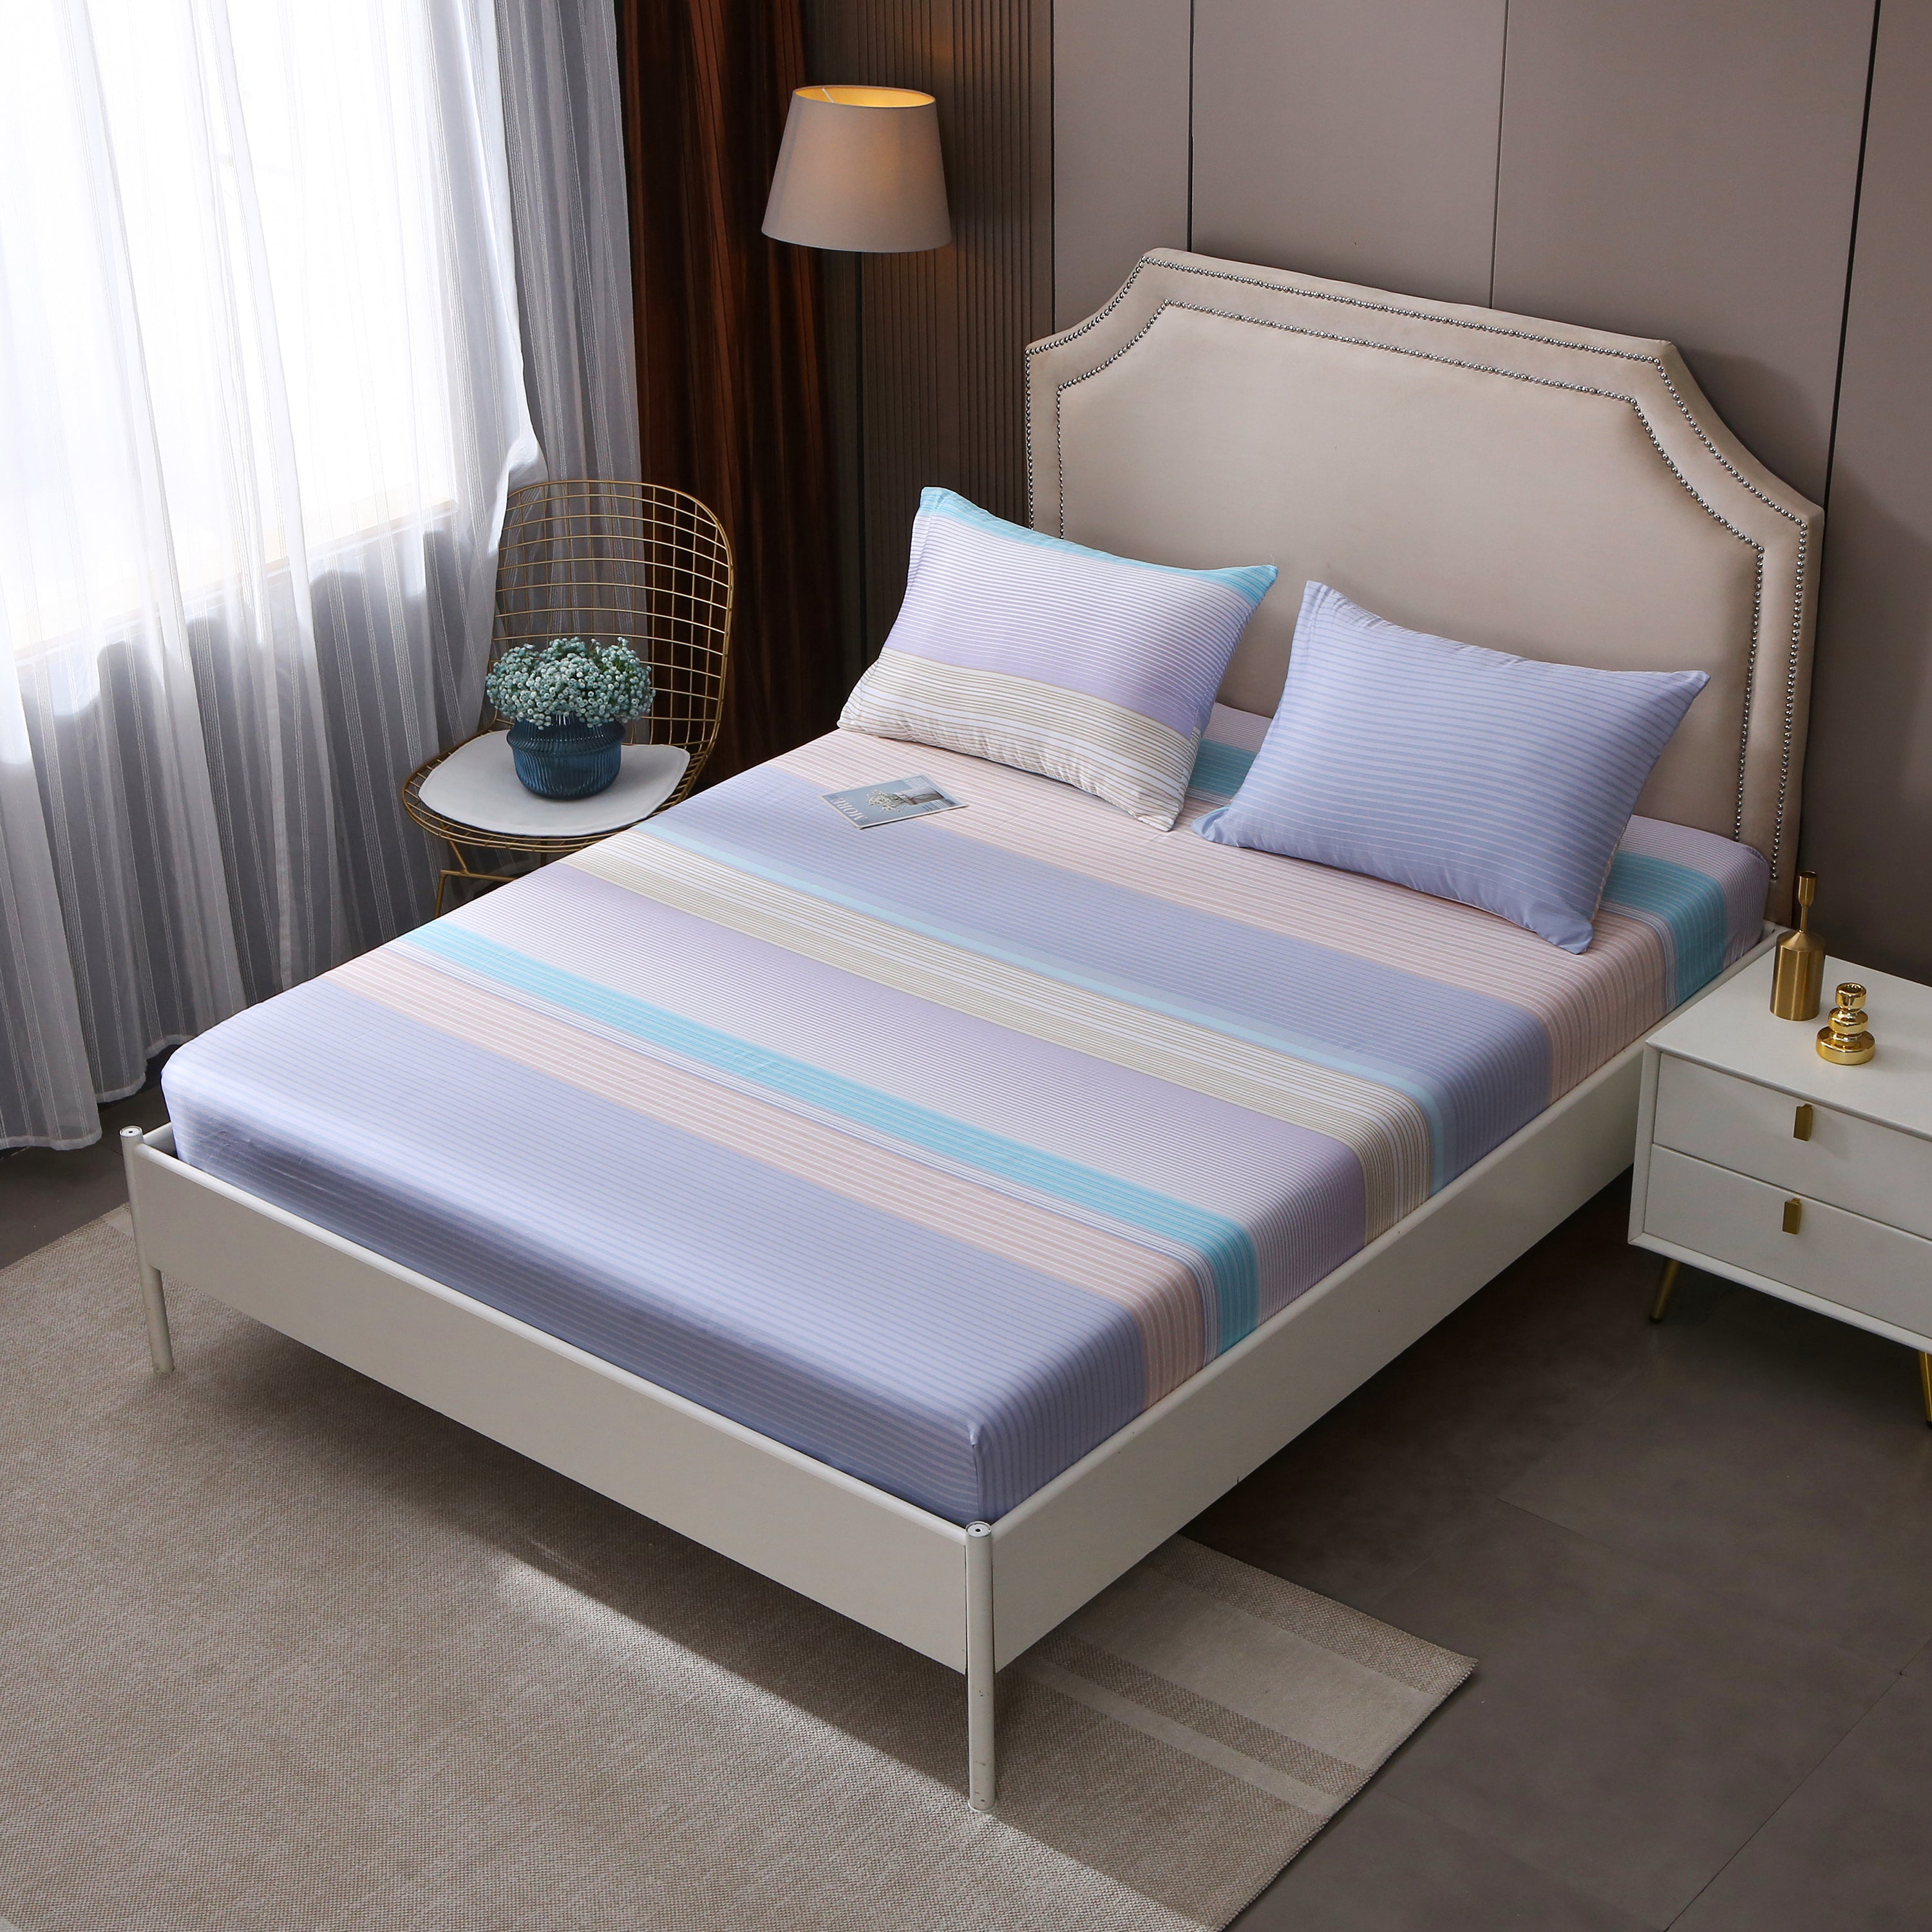 Simple Ol' Me TENCEL Bed Linen - 2100針天絲床單套裝- T04